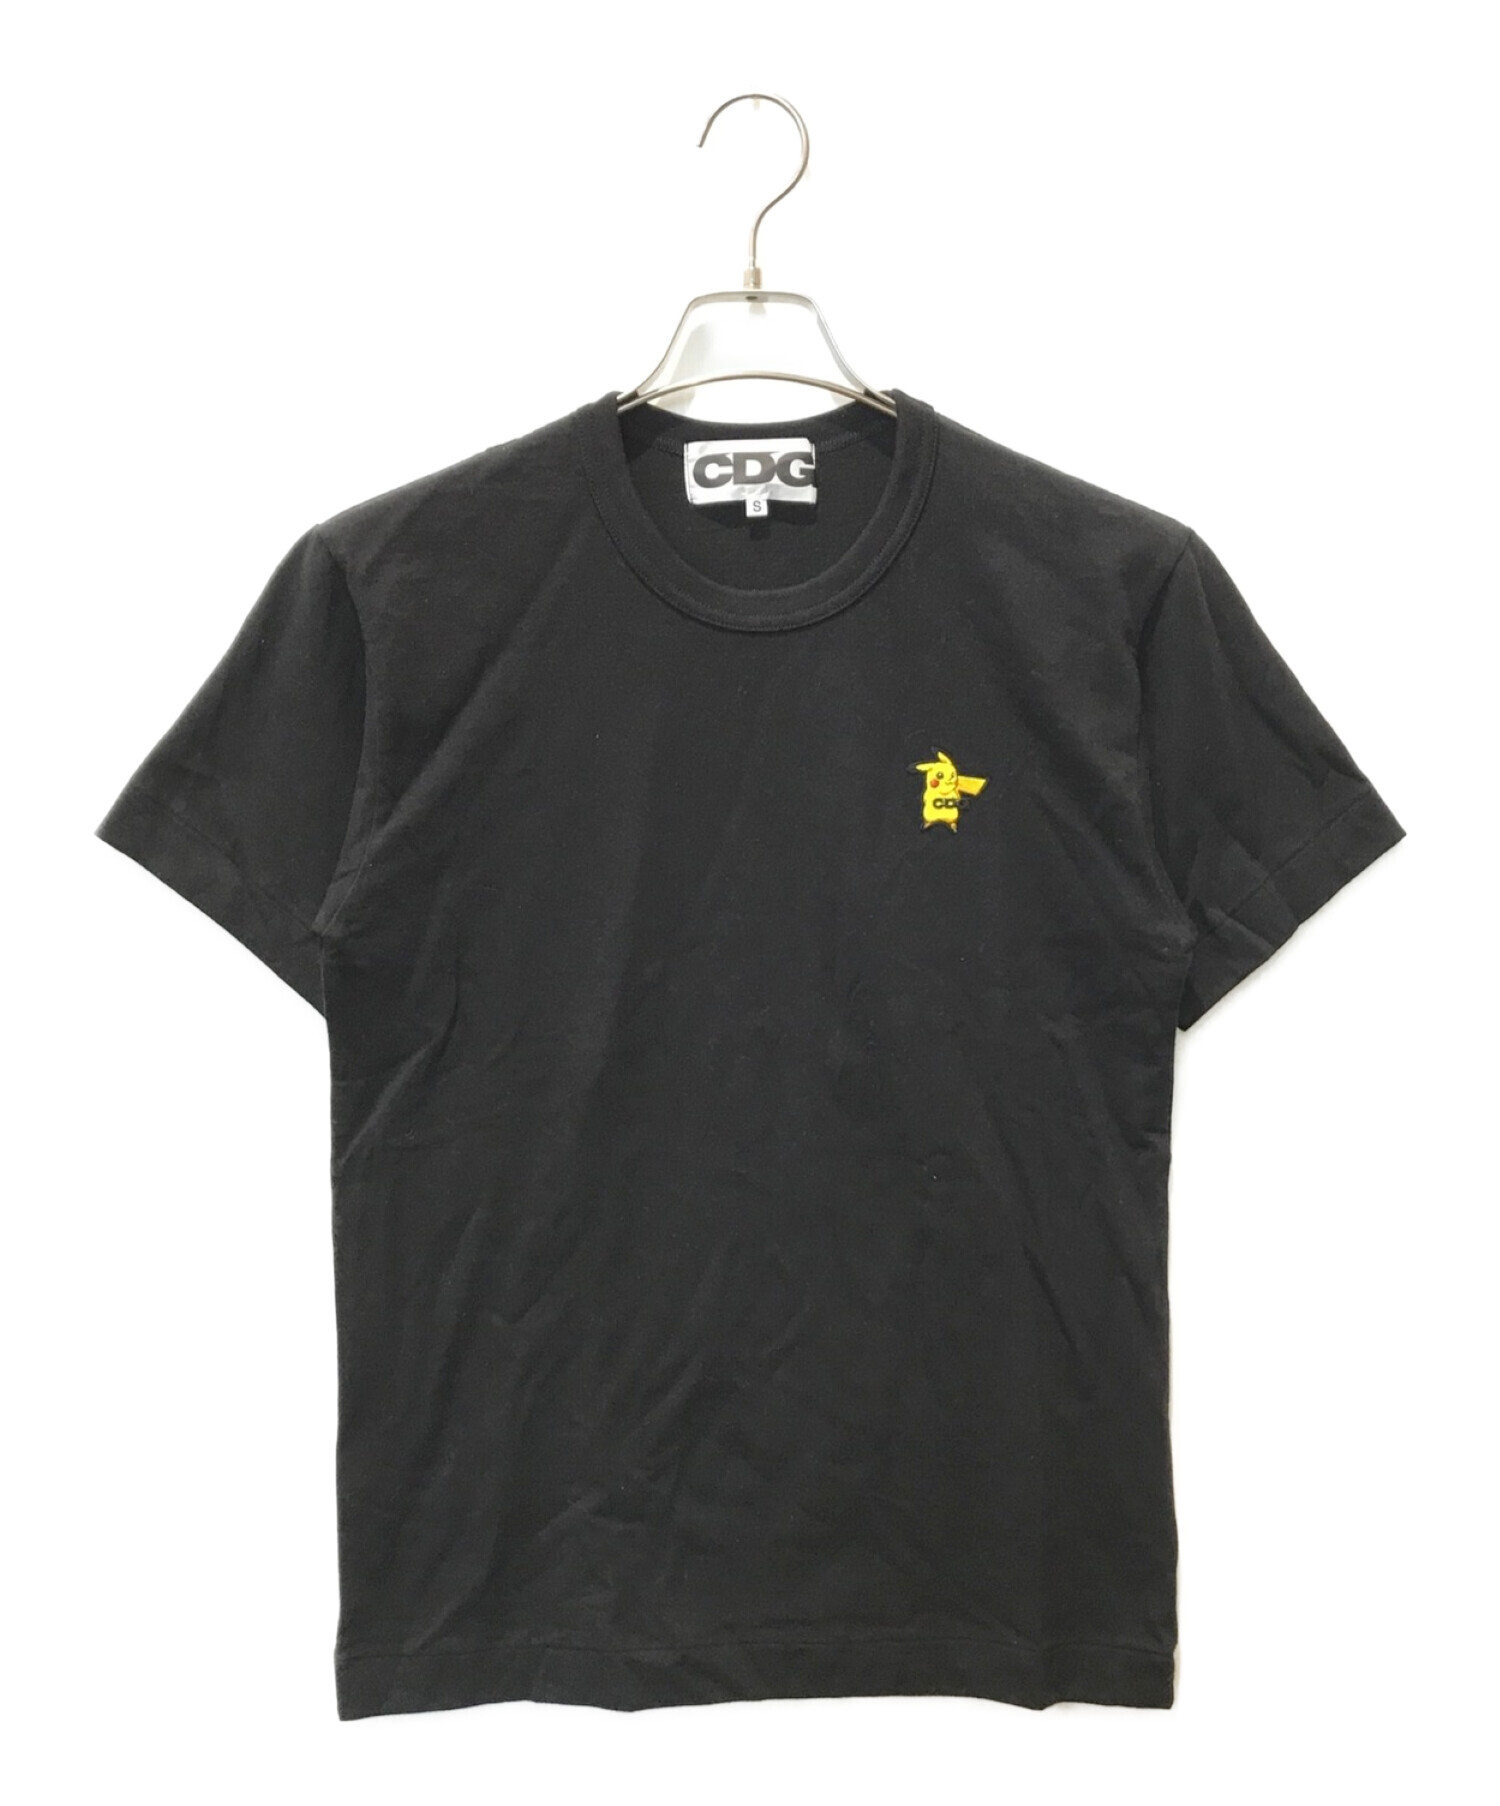 CDG×Pokemon (シーディージー×ポケモン) Tシャツ ブラック サイズ:S